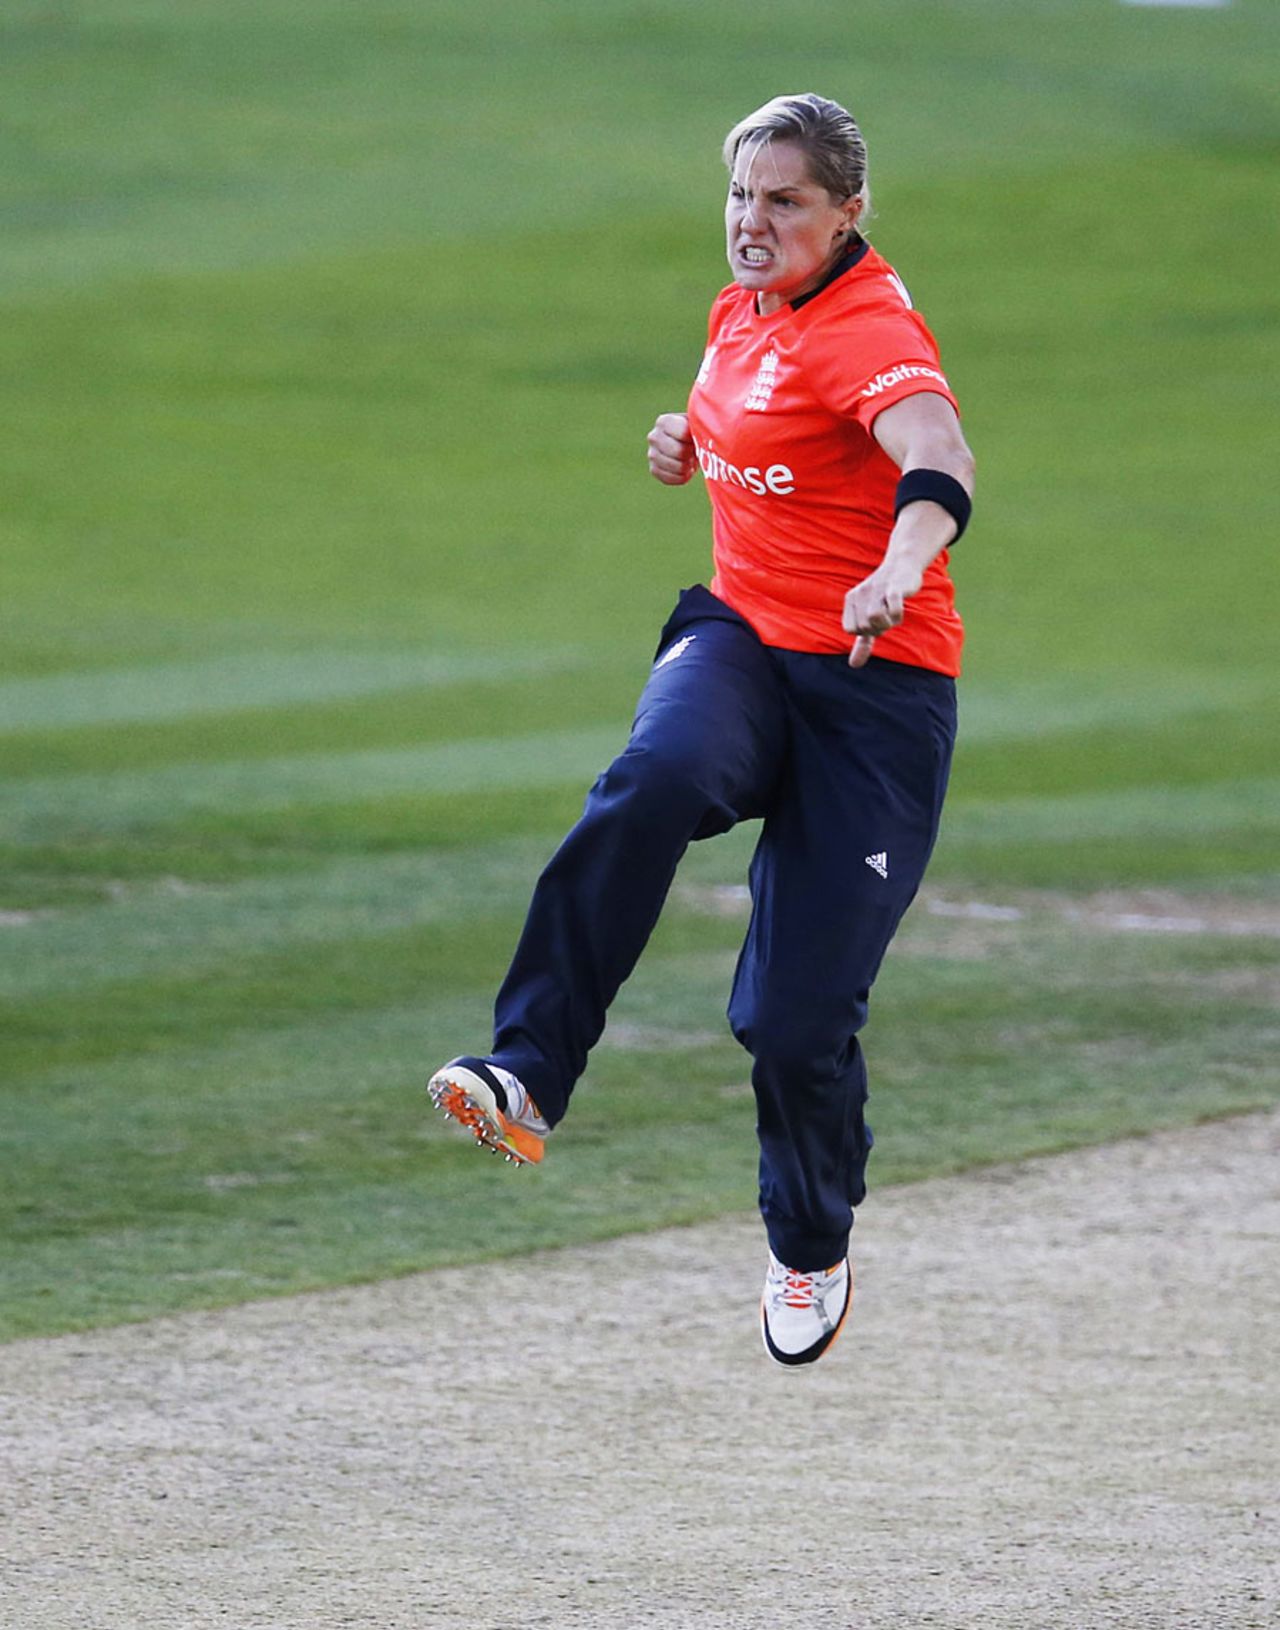 Katherine Brunt made the first breakthrough, England v South Africa, 1st women's T20, Chelmsford, September 1, 2014